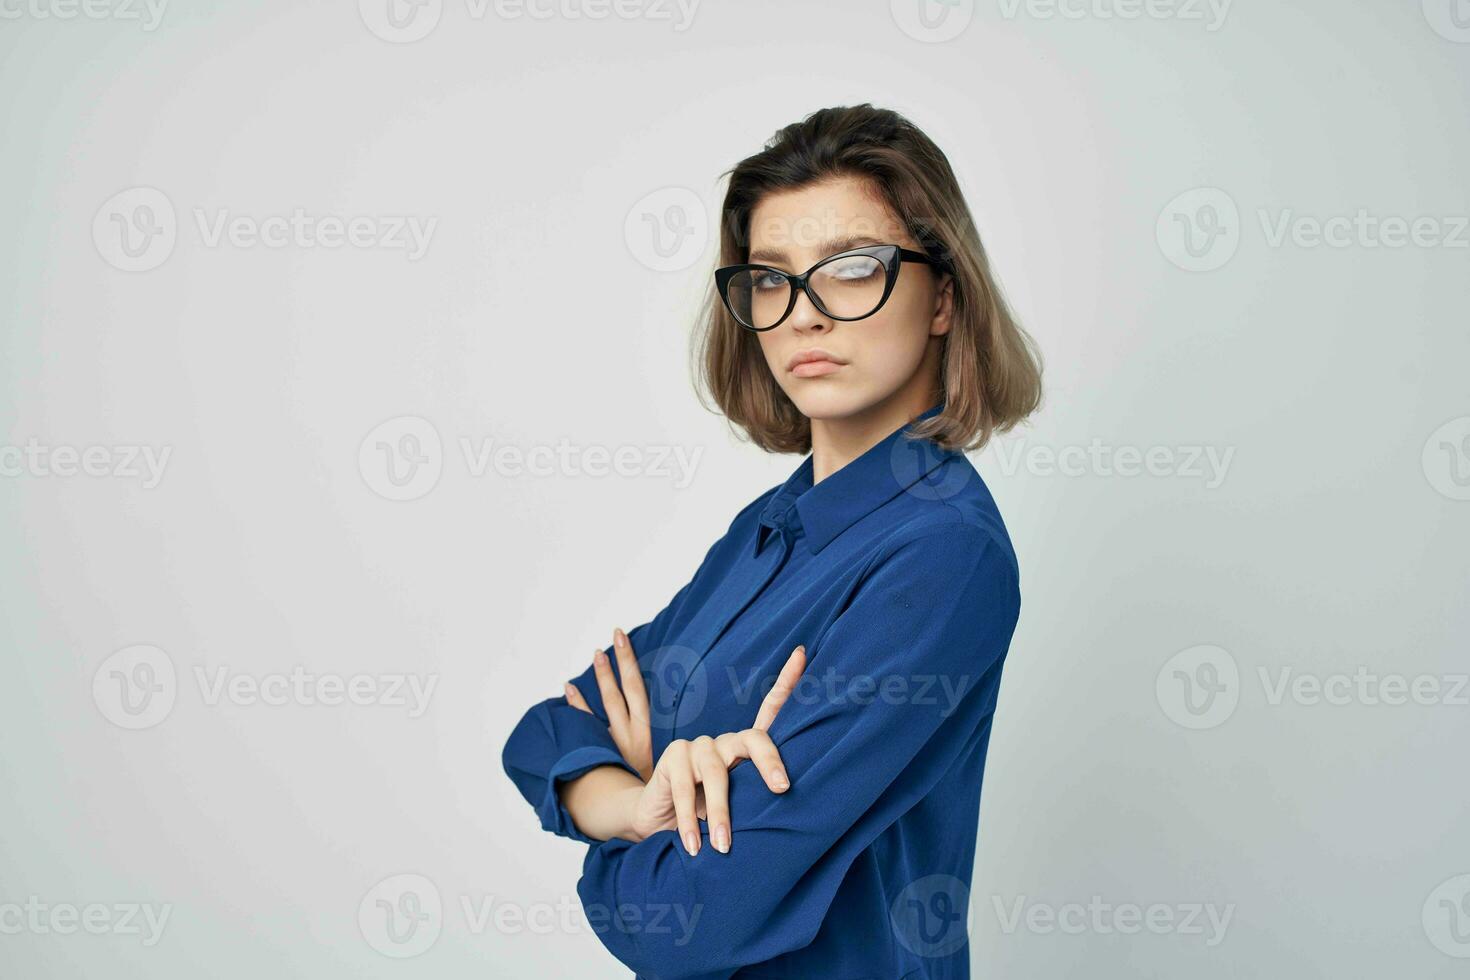 mulher dentro azul camisa vestindo óculos moda elegante posando estilo foto